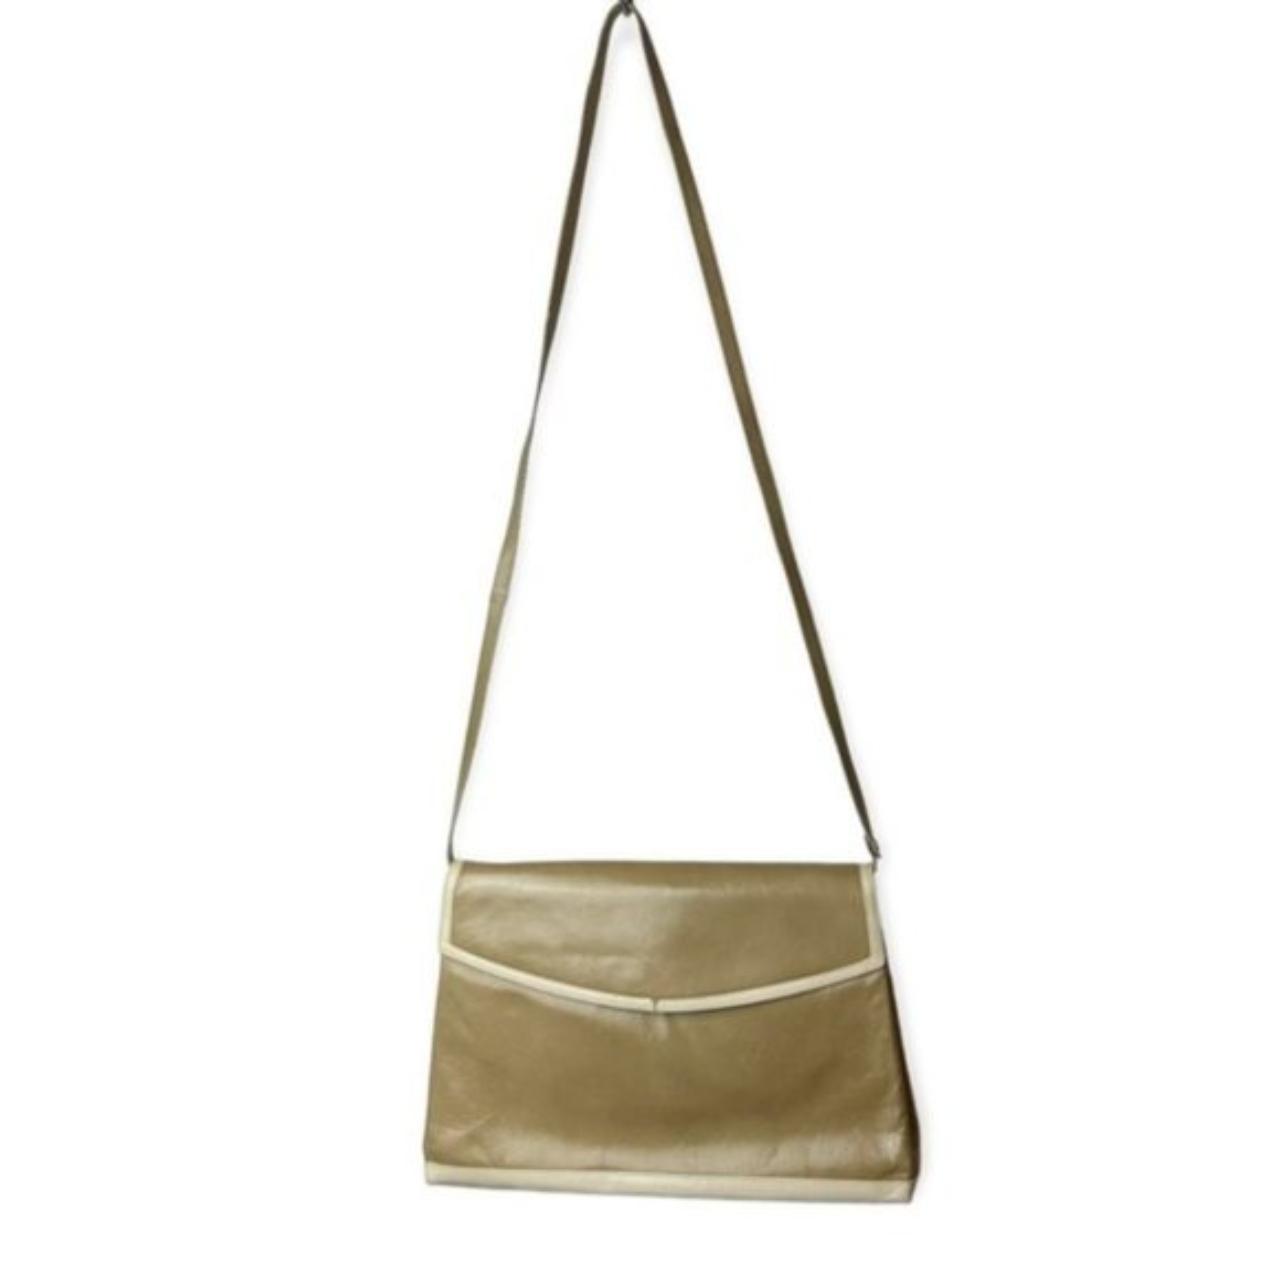 Bally Purse / Vintage Bally Bag / Brown Leather Saddle Bag / | Etsy | Bally  bag, Leather saddle bags, Bags